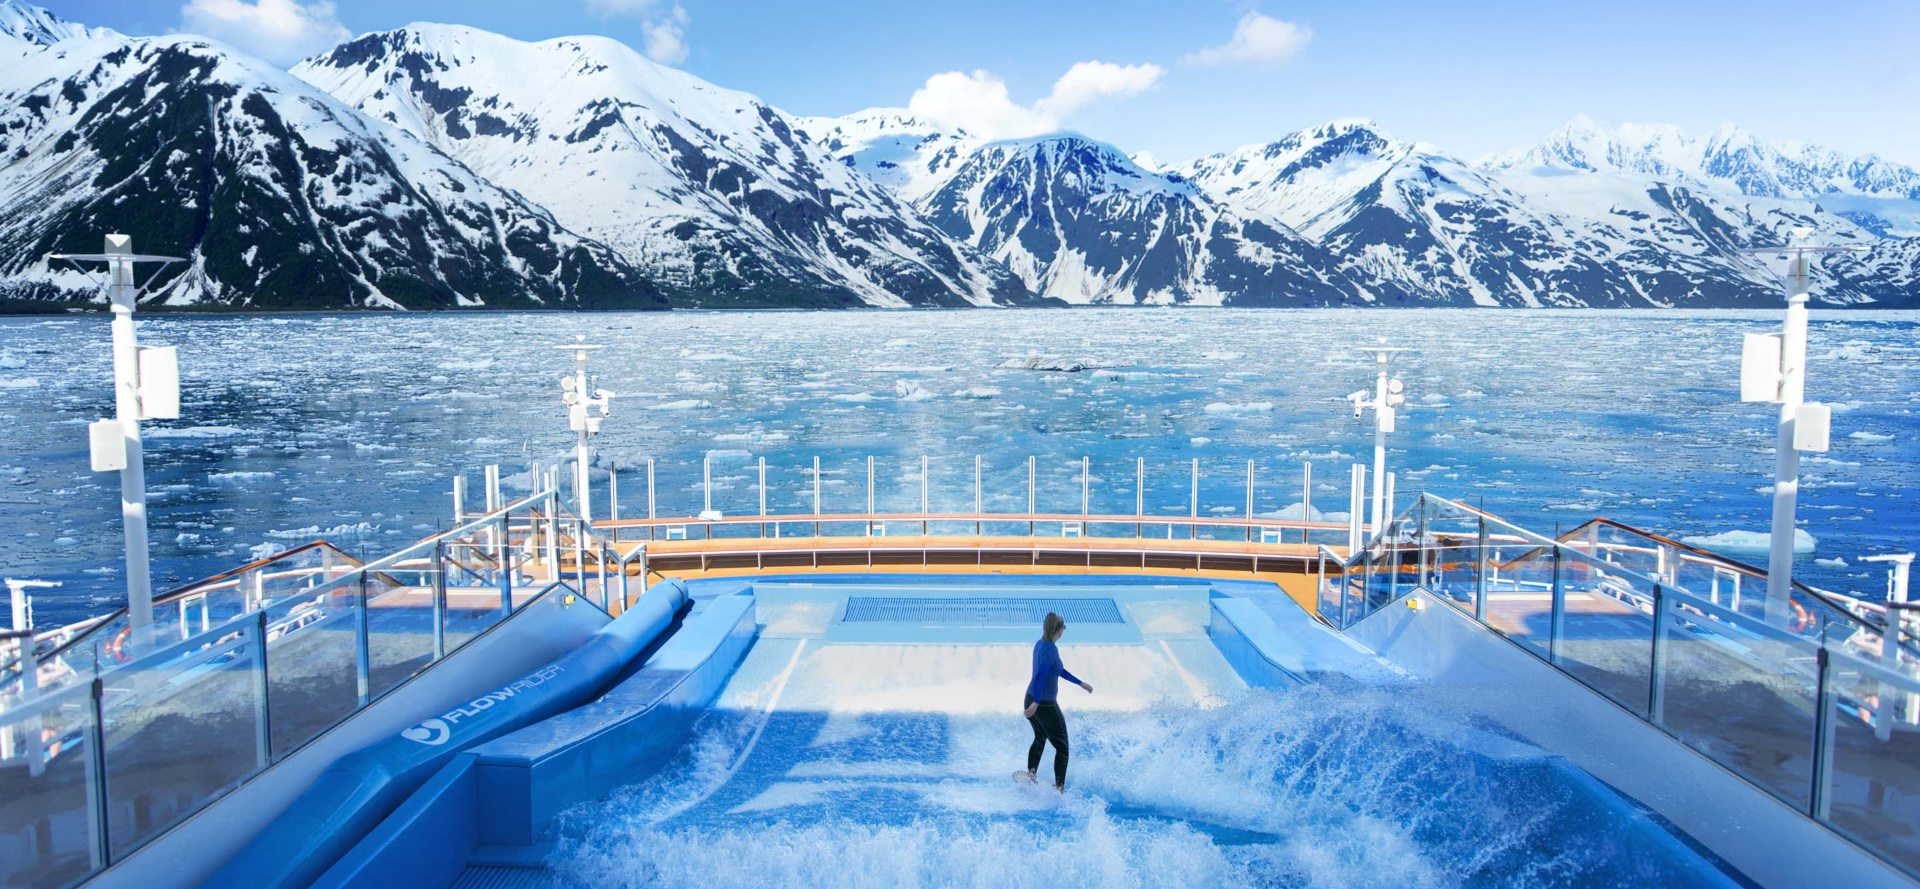 Canadian & Alaskan <br>Cruise Holidays